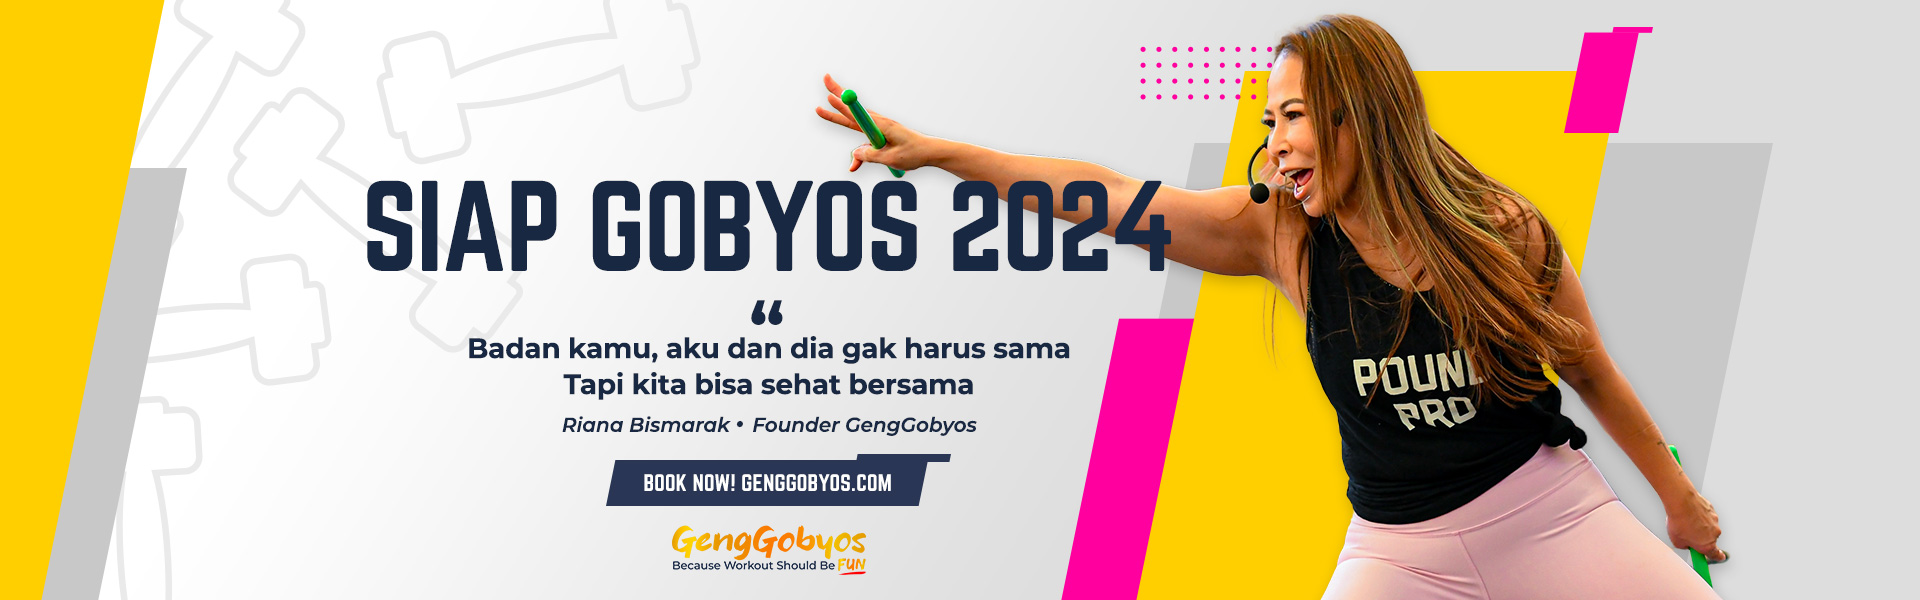 Banner Siap Gobyos 2024